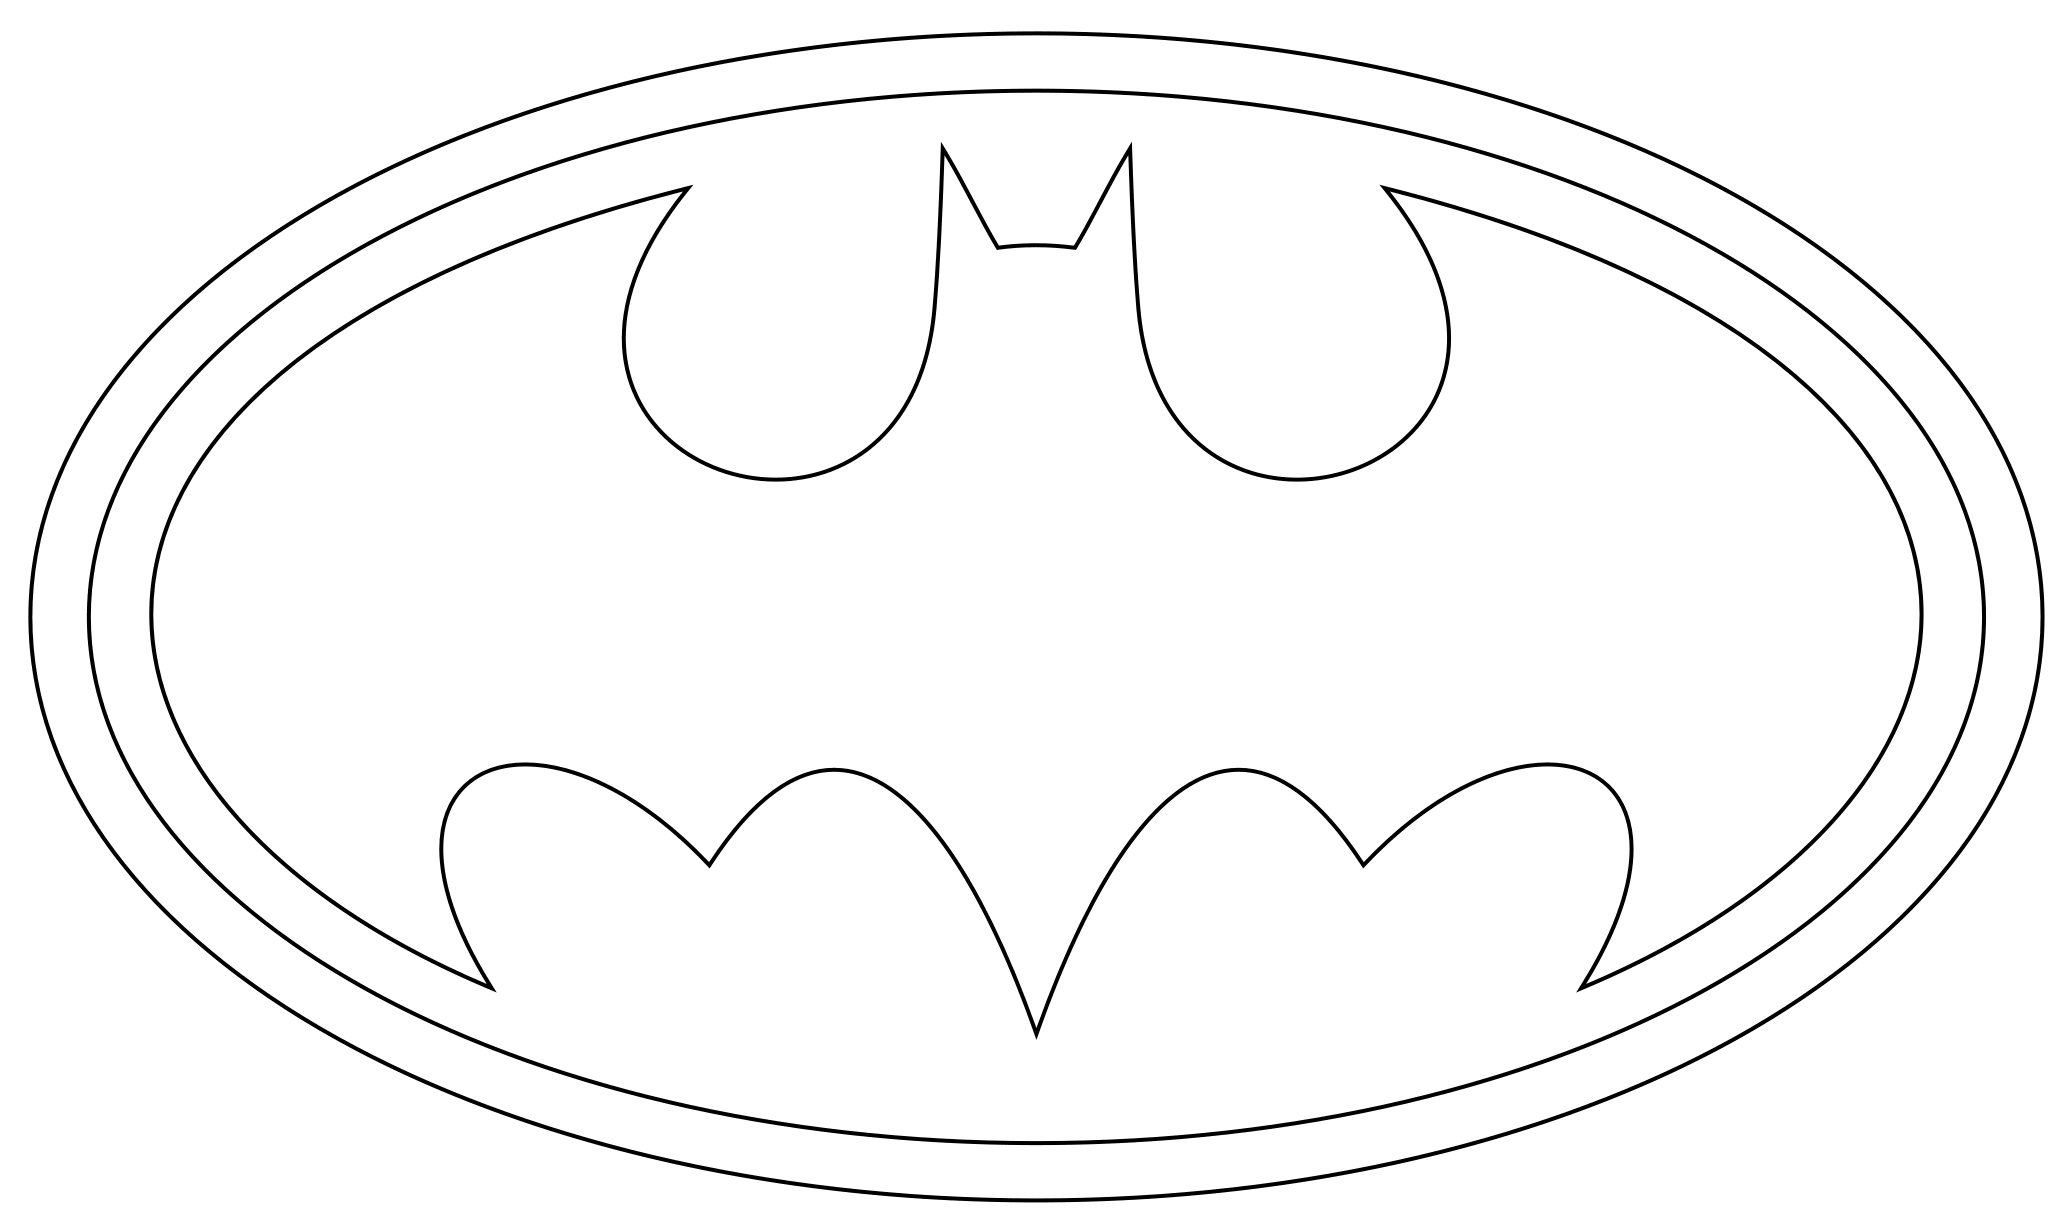 Free Batmobile Coloring Page, Download Free Batmobile Coloring ...